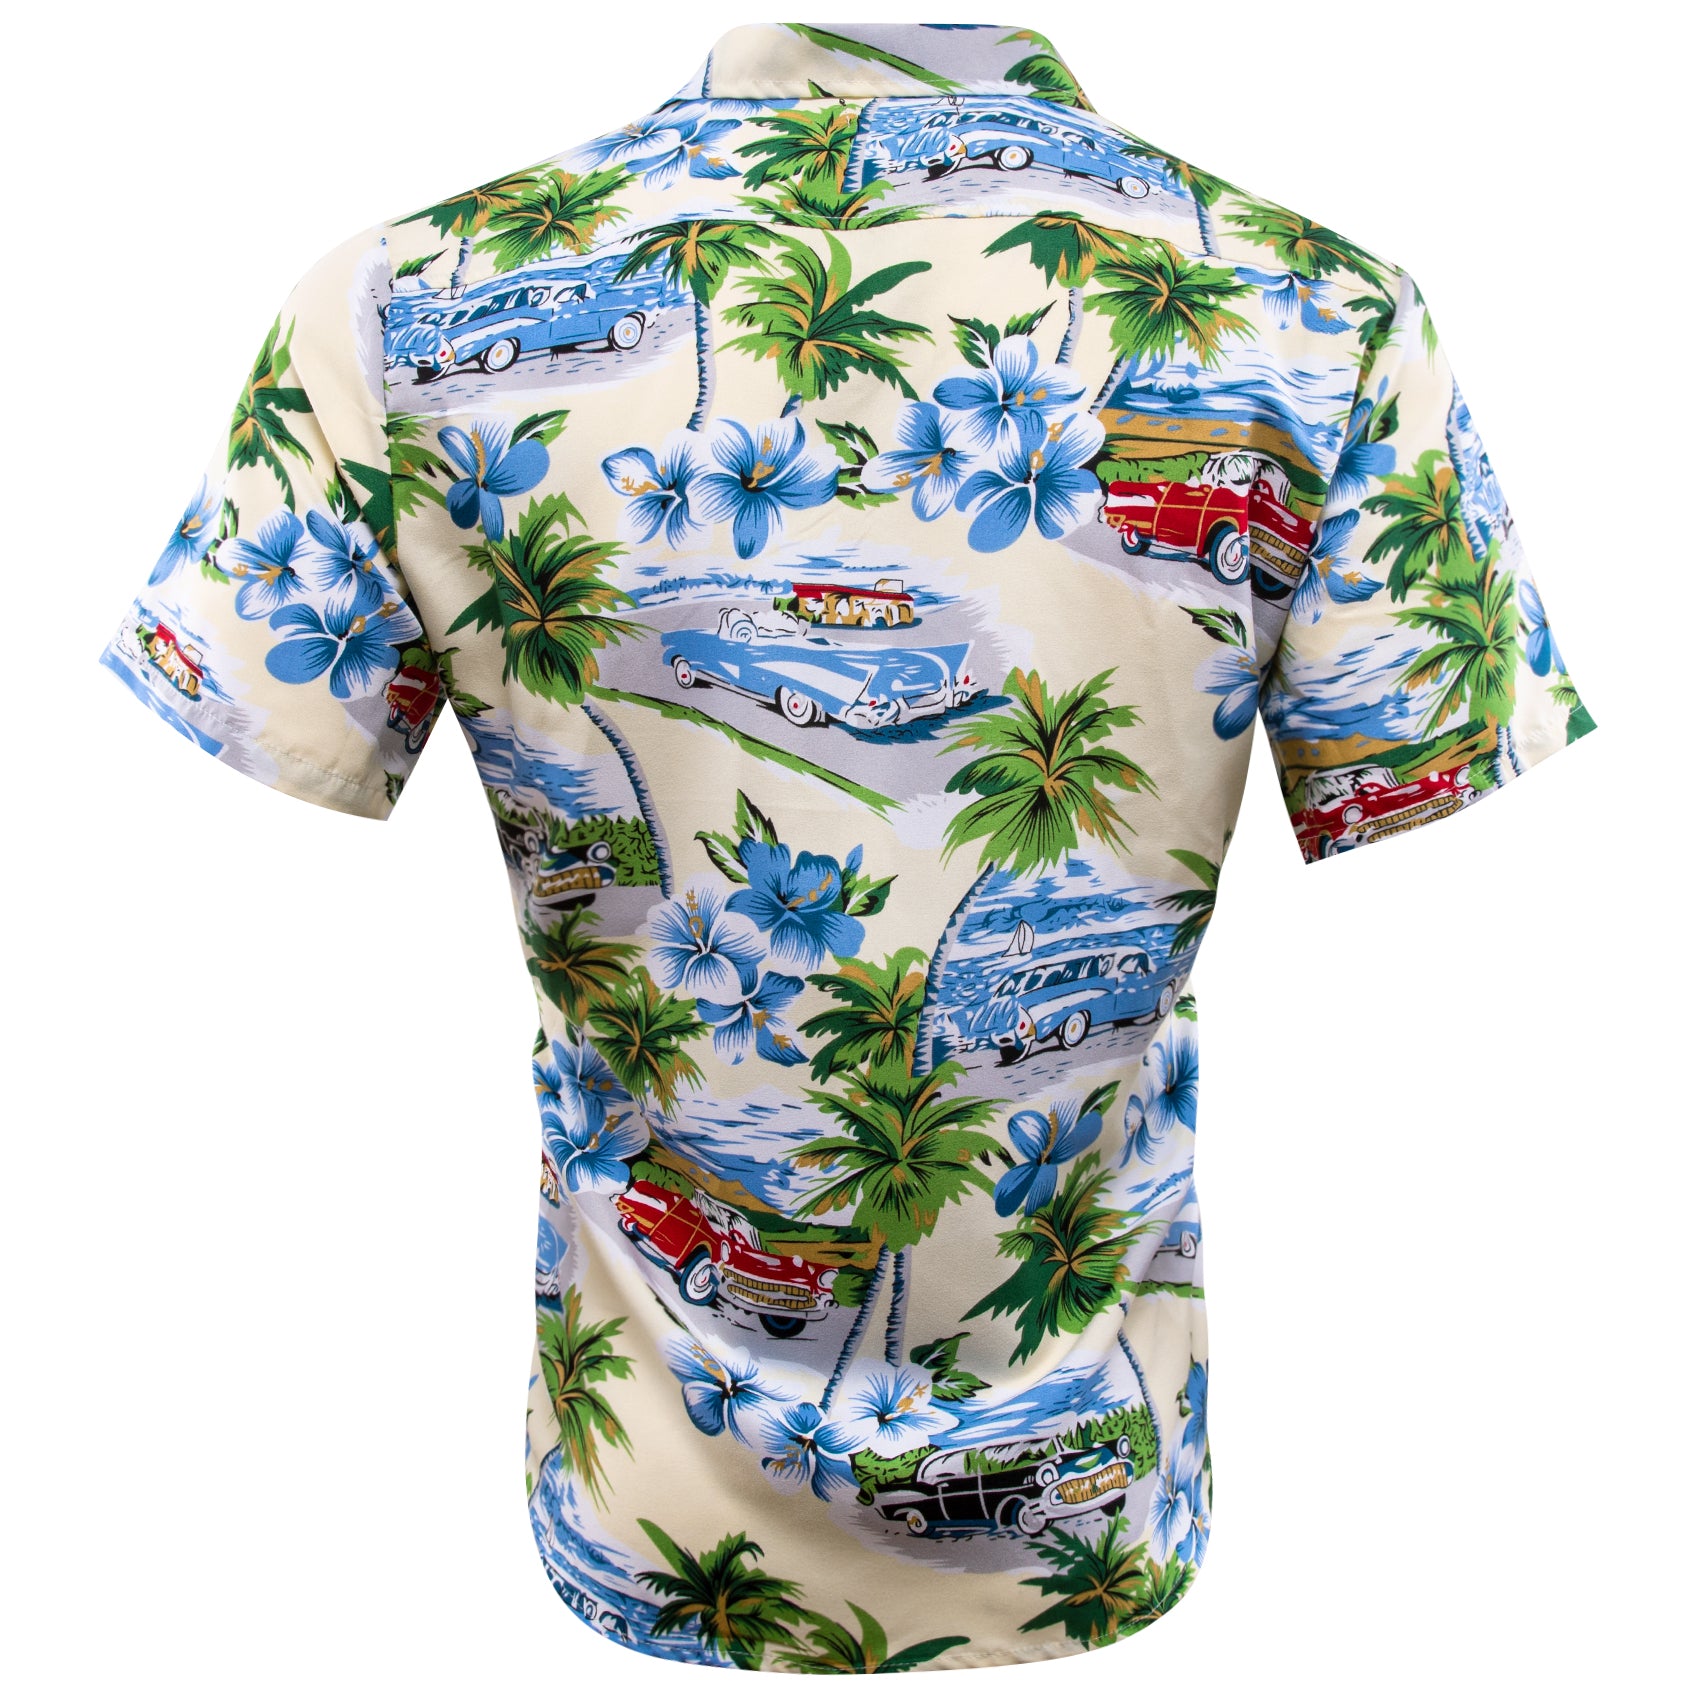 Barry.wang Pale Green Seaside Floral Short Sleeves Shirt